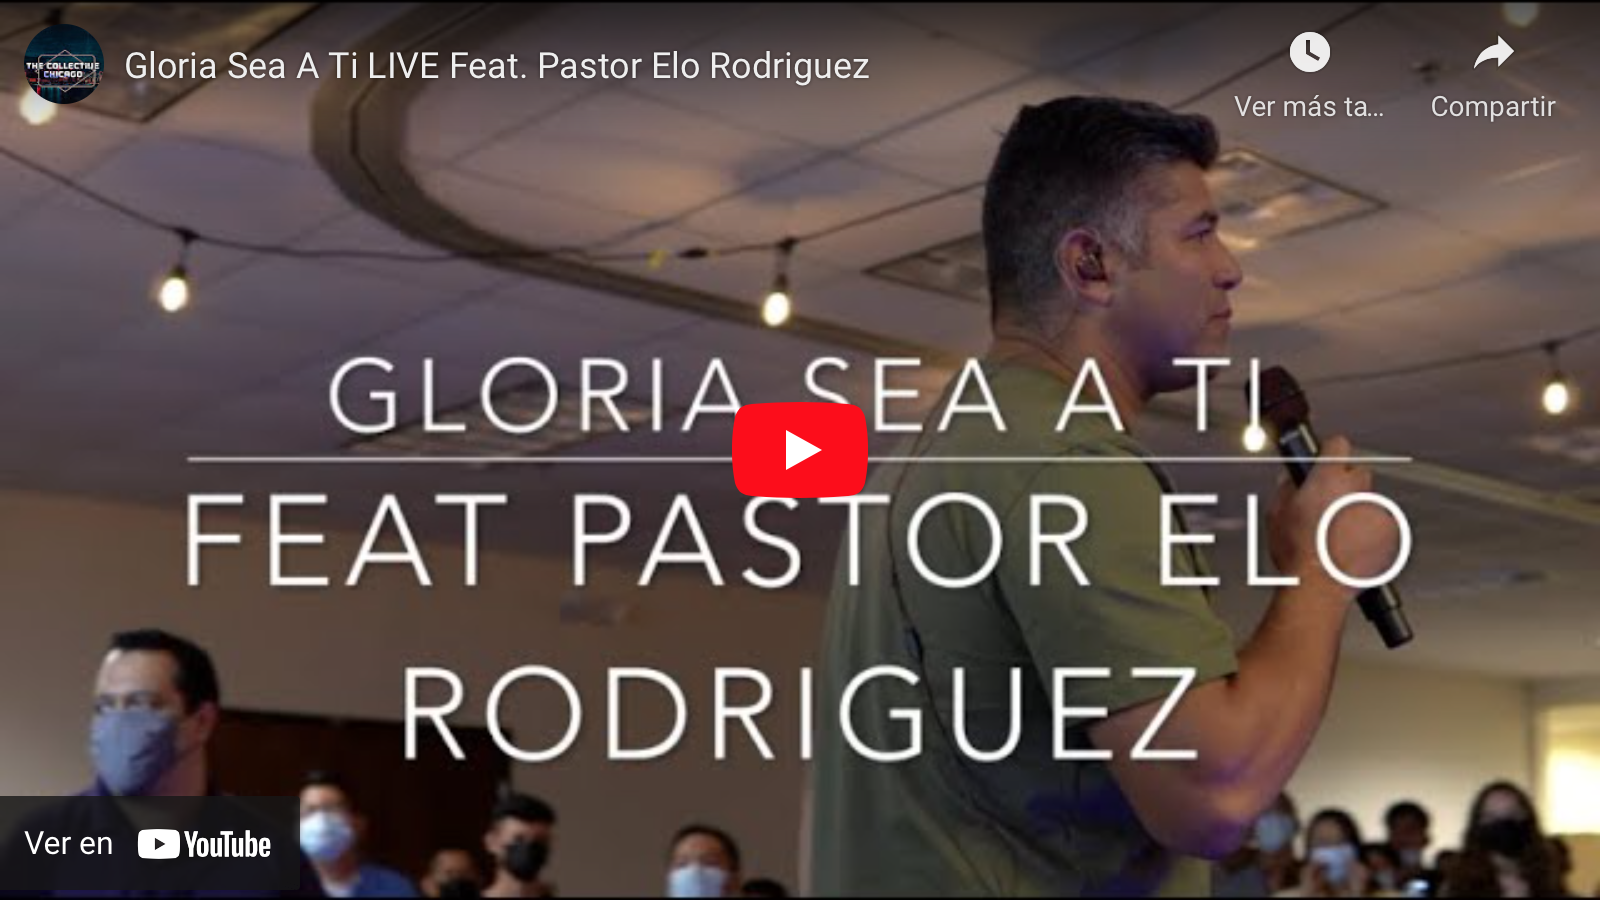 Glora sea a Ti - Pastor Elo Rodriguez